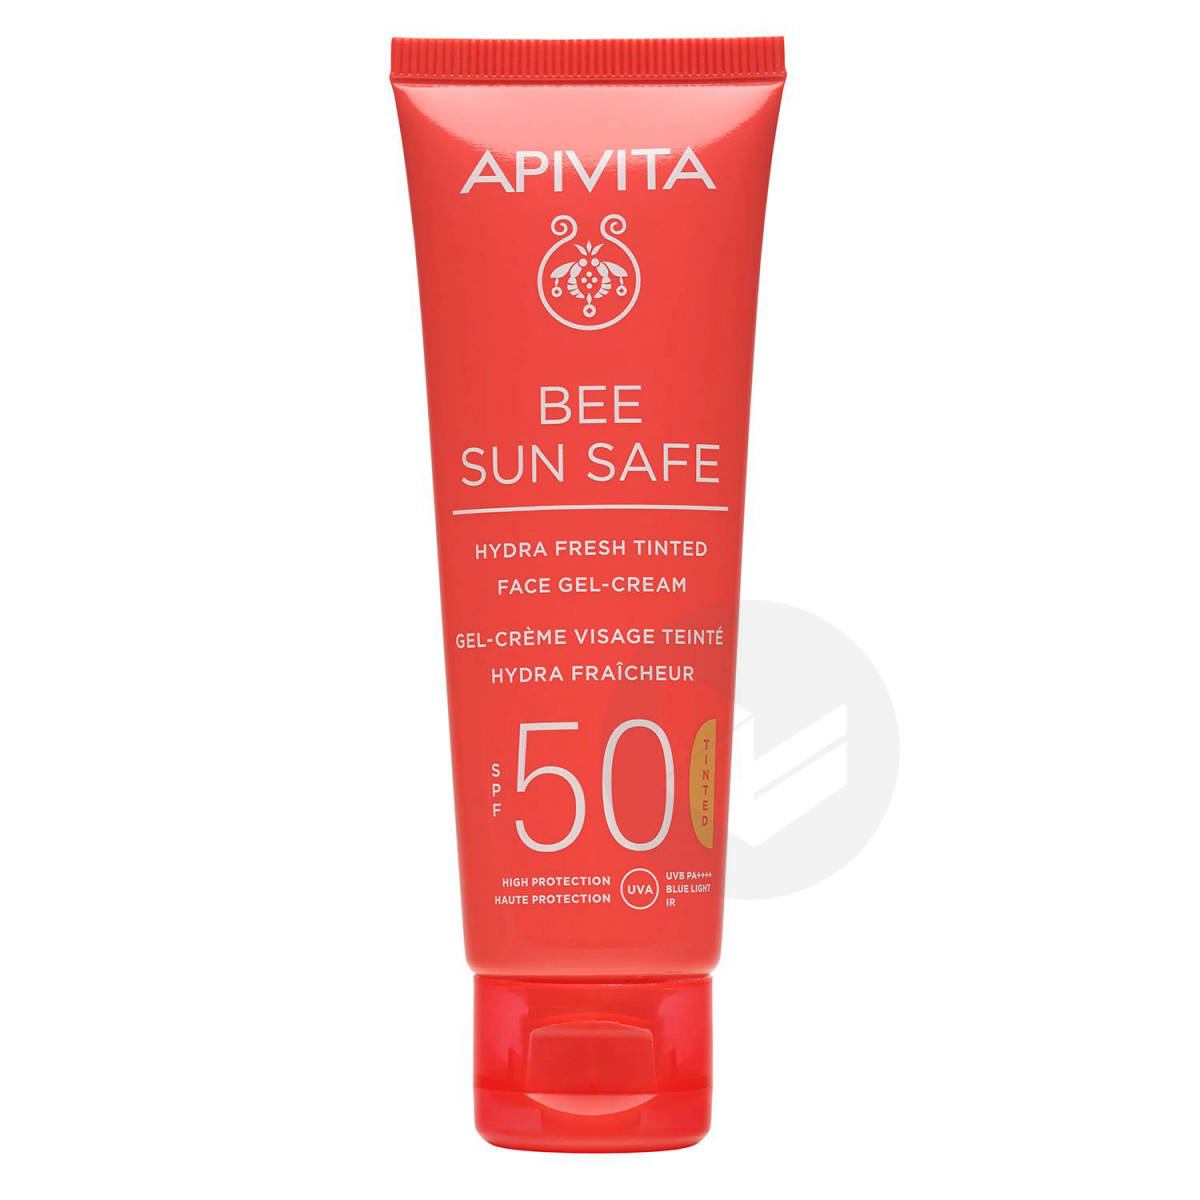 Be sun safe gel-crème visage teinté SPF50 50ml